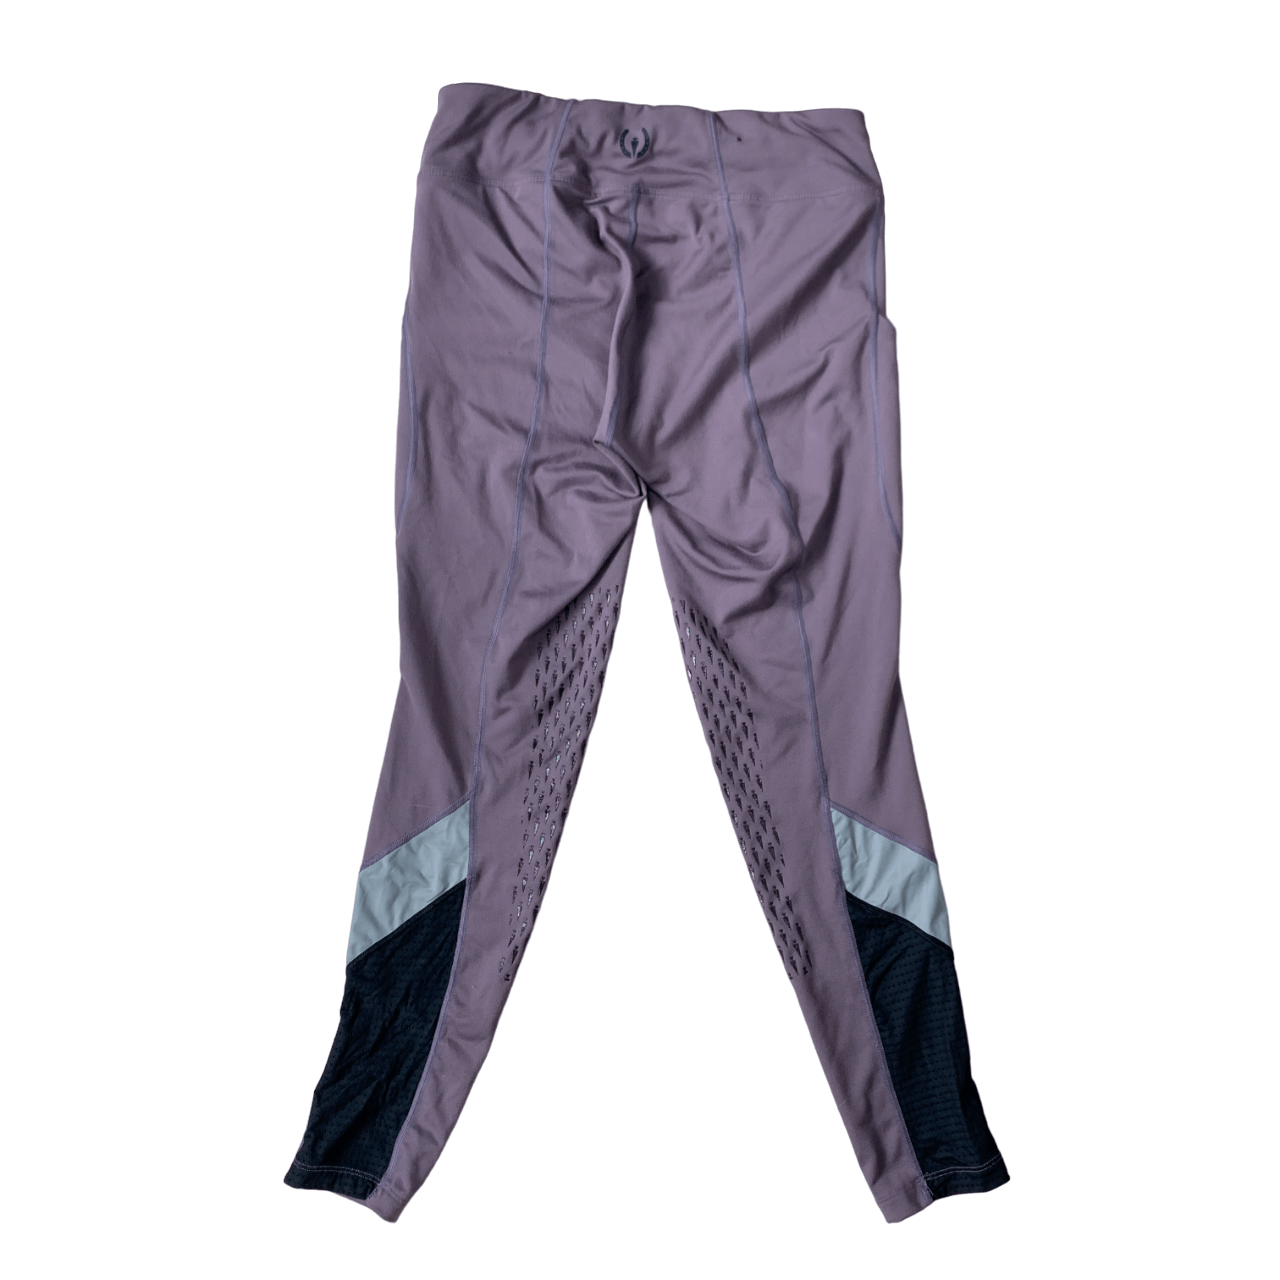 Kerrits 'Free Style' Knee Patch Pocket Tight in Purple - Woman's Medium